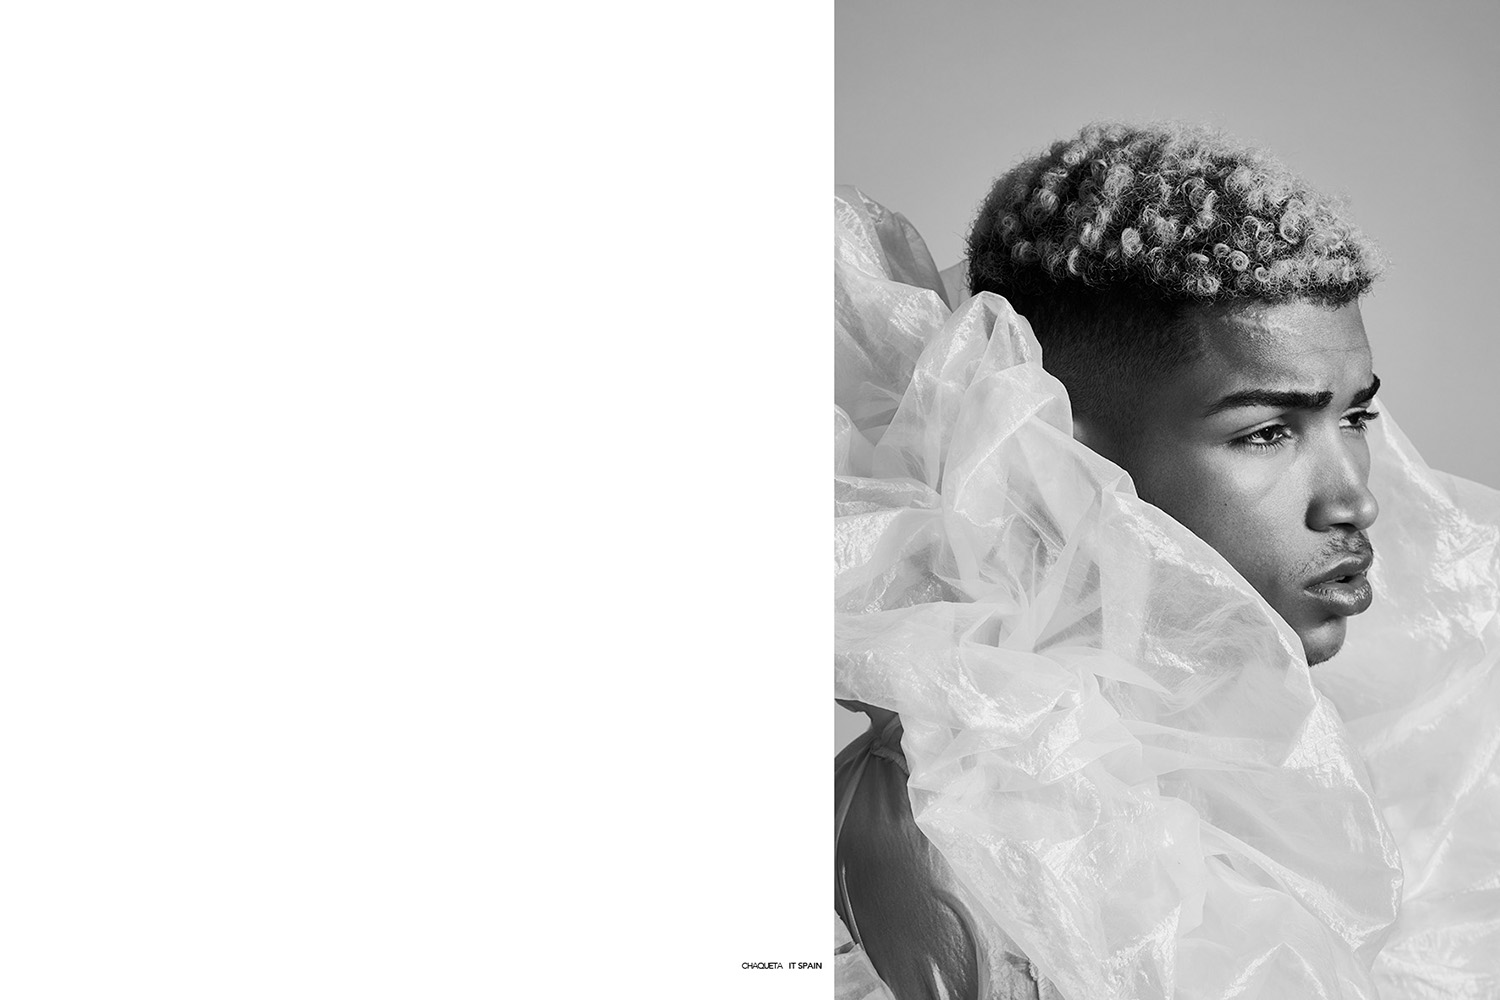 Angel-Ruiz-Ruiz-Fashion-Photographer-Editorial-Faded-Avenue-Illustrated-Magazine-plastic-Portrait-1500x1000